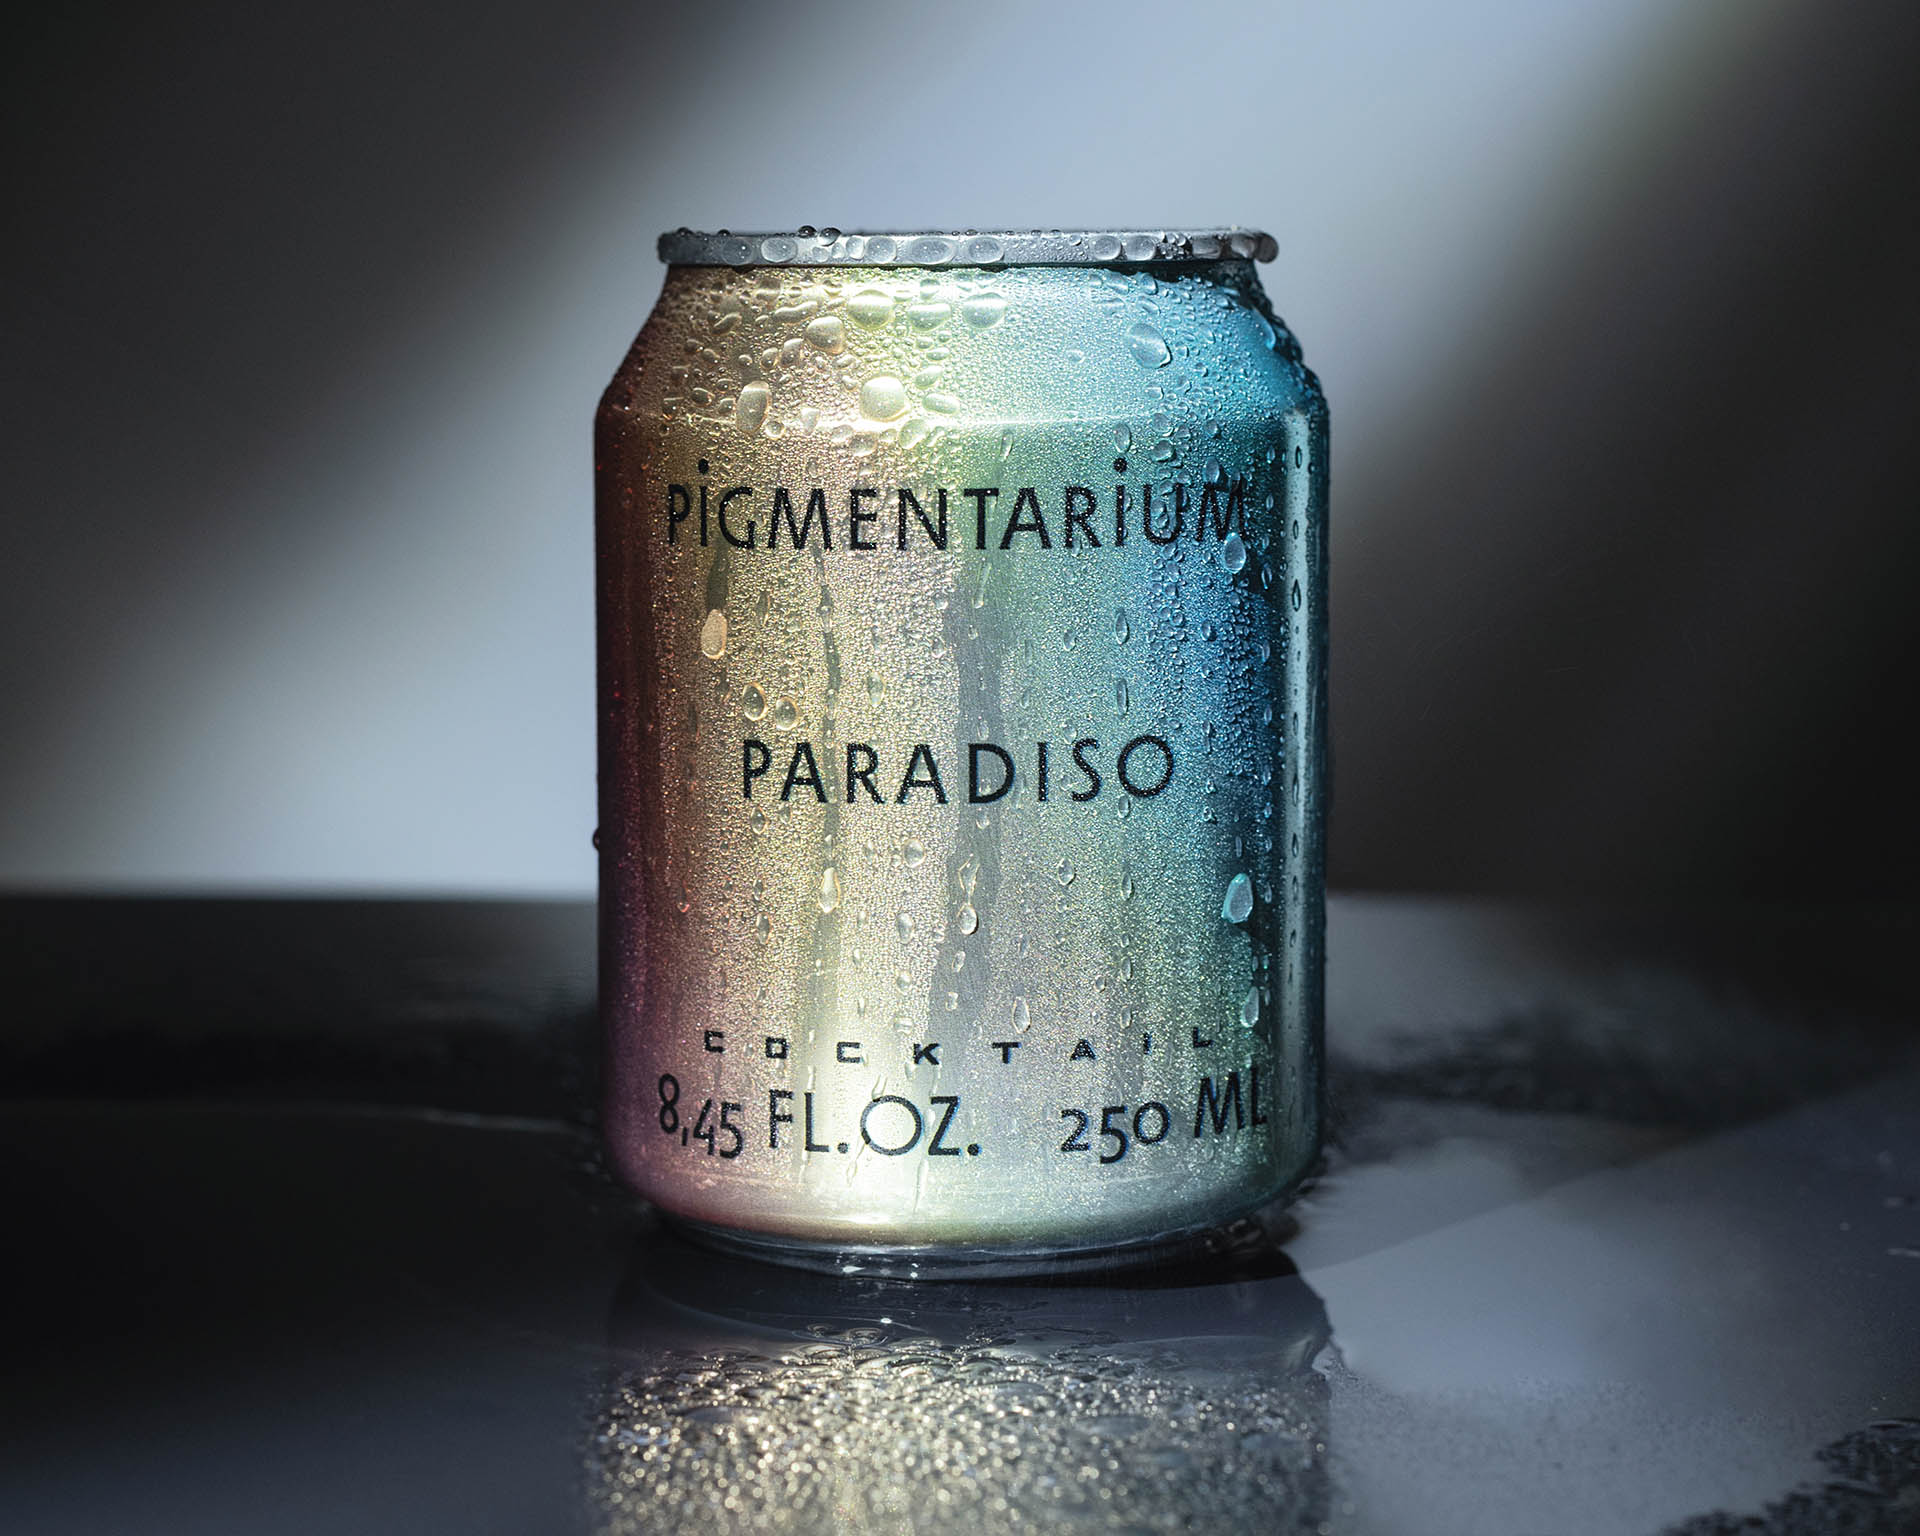 Parfm doskleniky. Drink vytvoen losk lto pro uveden nov vn Paradiso parfumrskho domu Pigmentarium zstv nadle vnabdce baru Public Interest.